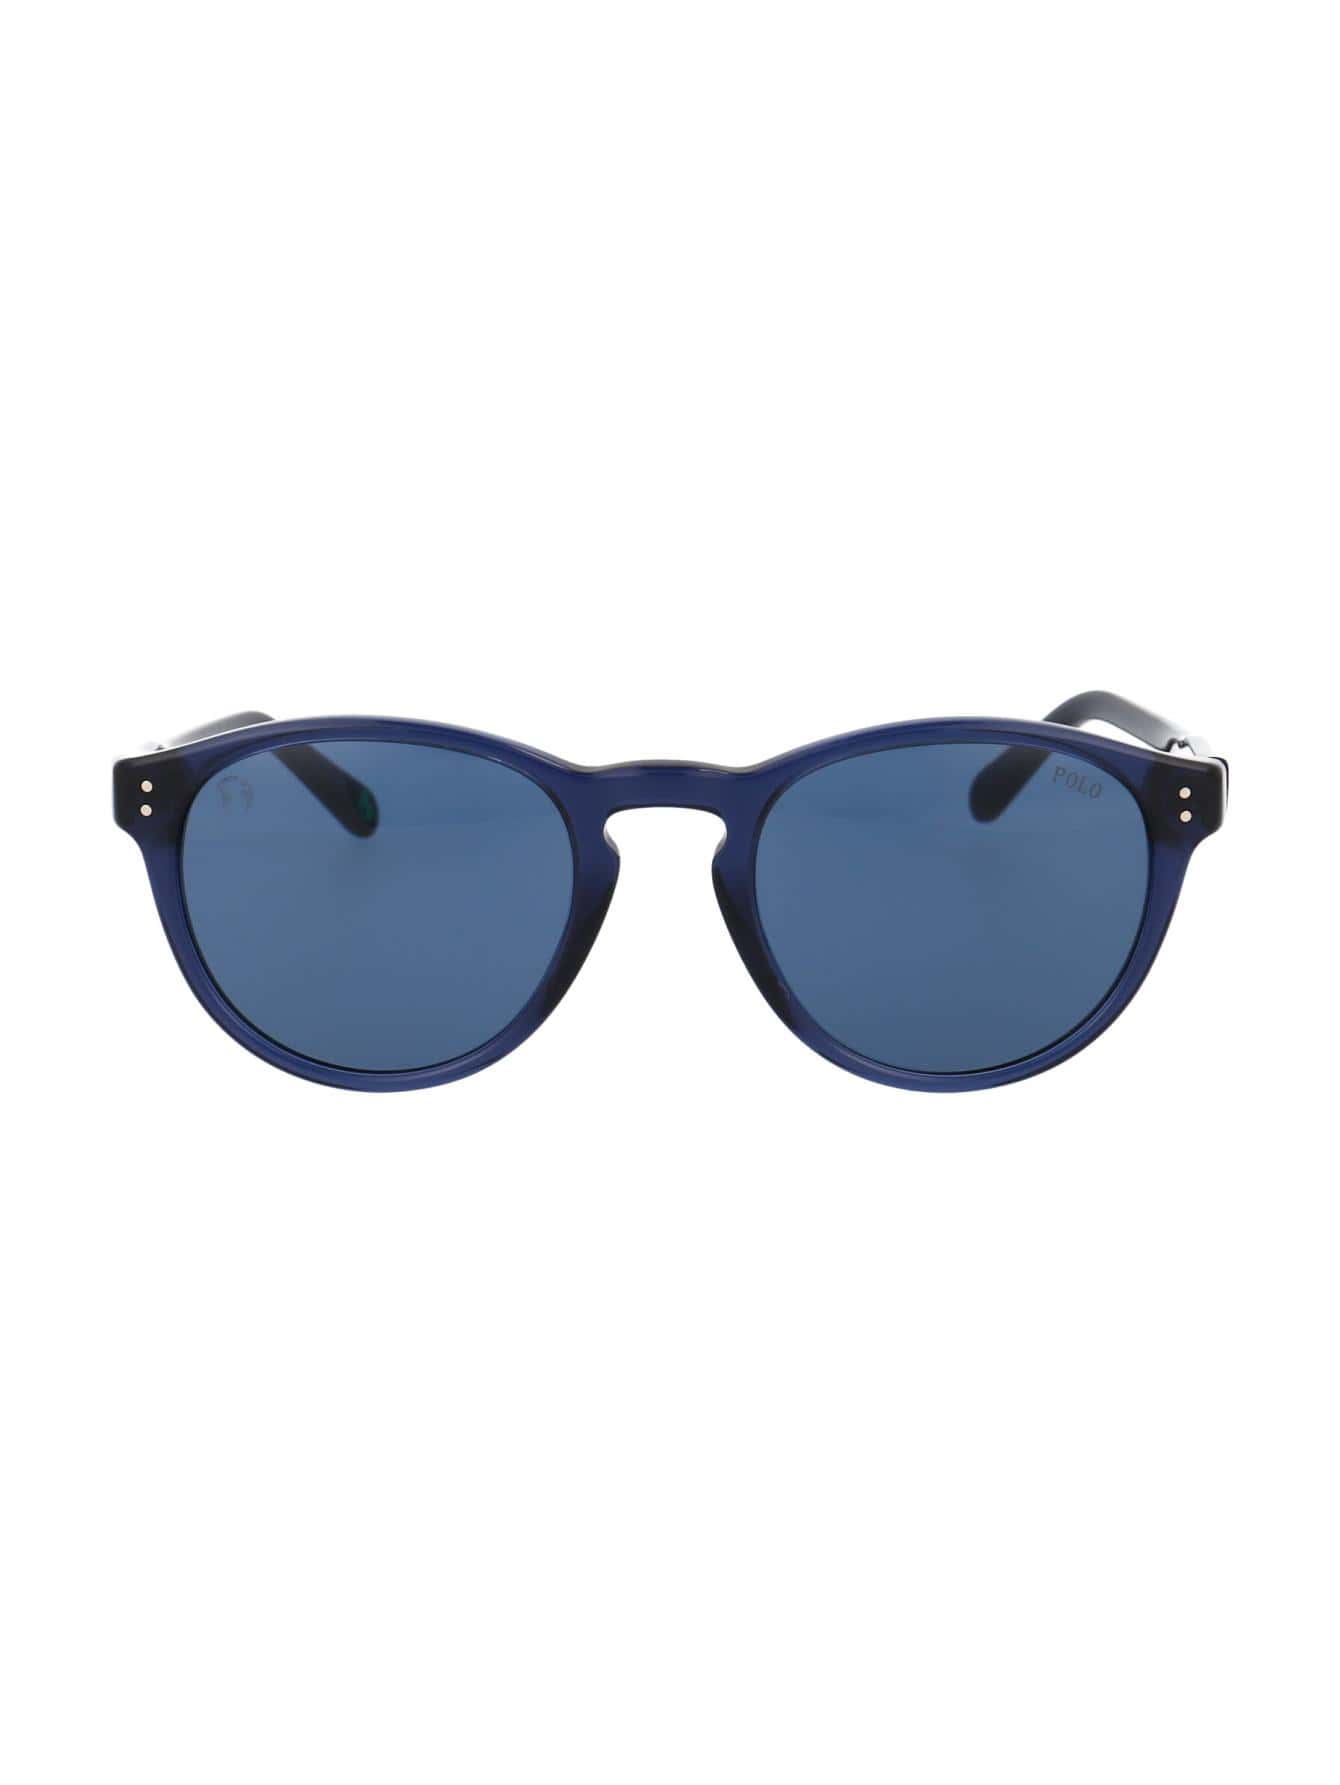 Мужские солнцезащитные очки Polo Ralph Lauren СИНИЕ 0PH4172595580, синий ralph lauren polo blue eau de toilette